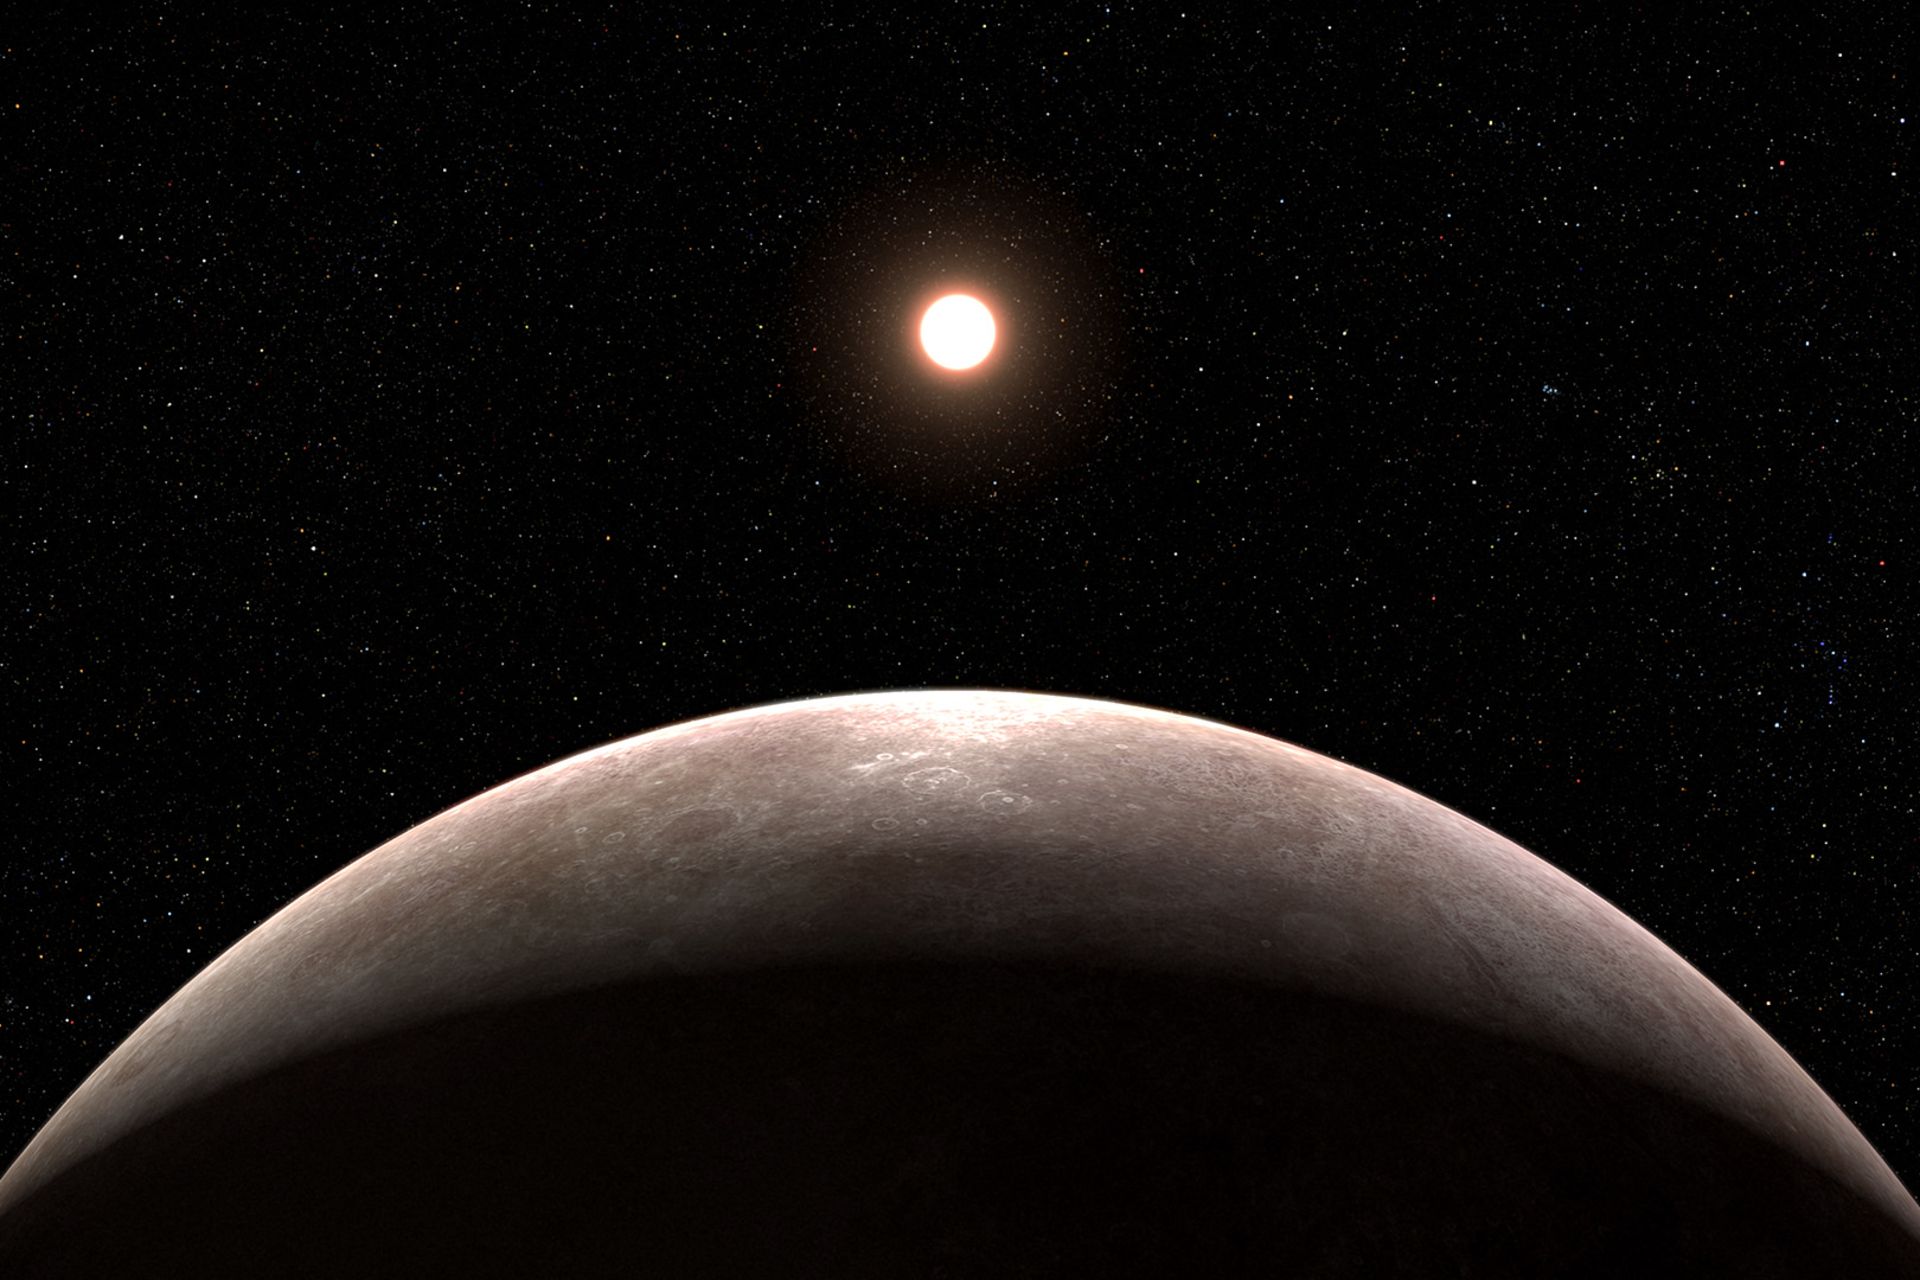 سیاره فراخورشیدی LHS 475 b و ستاره آن